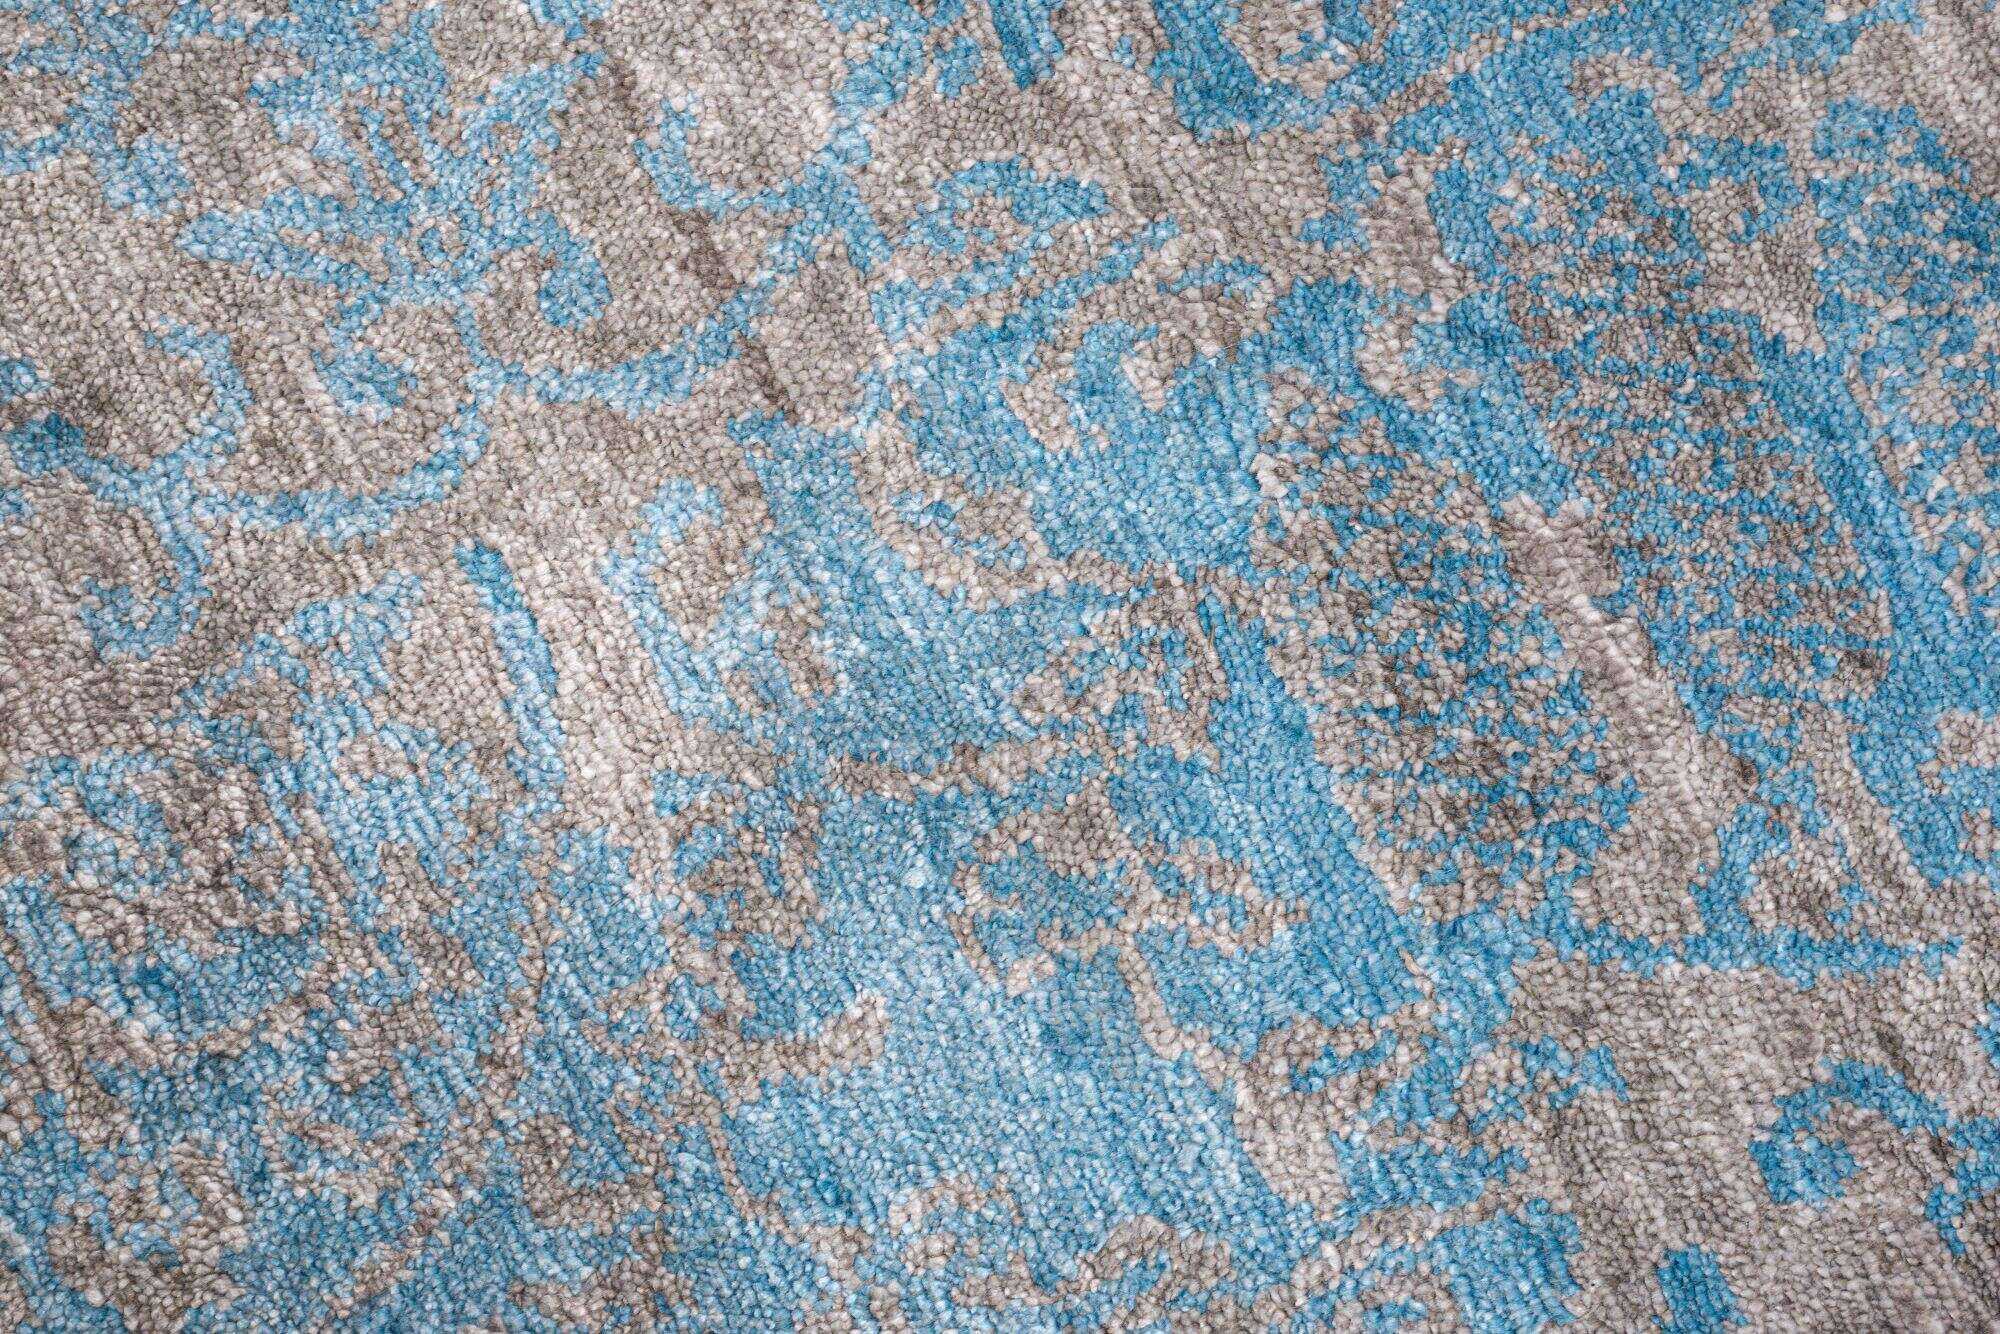 Design Teppich Queensland 160x230cm Handgeknüpft Viskose grau blau